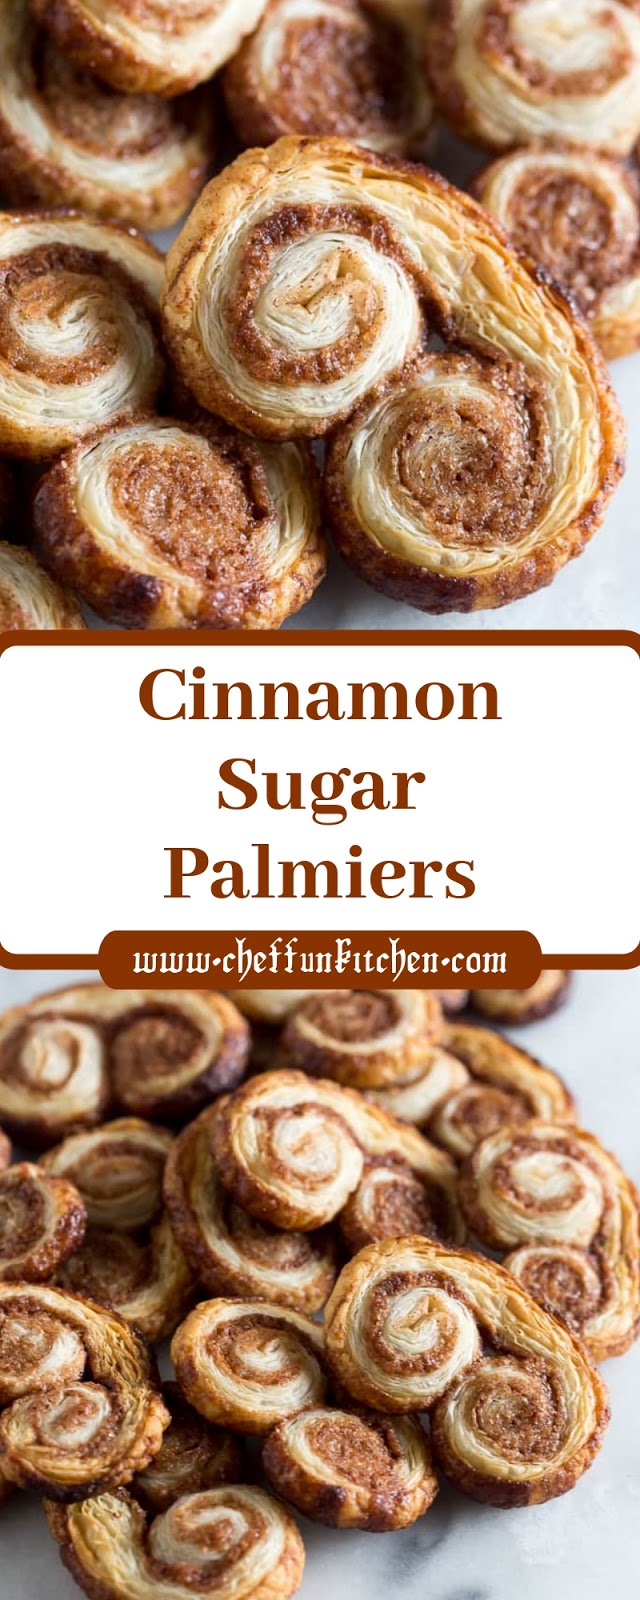 Cinnamon Sugar Palmiers